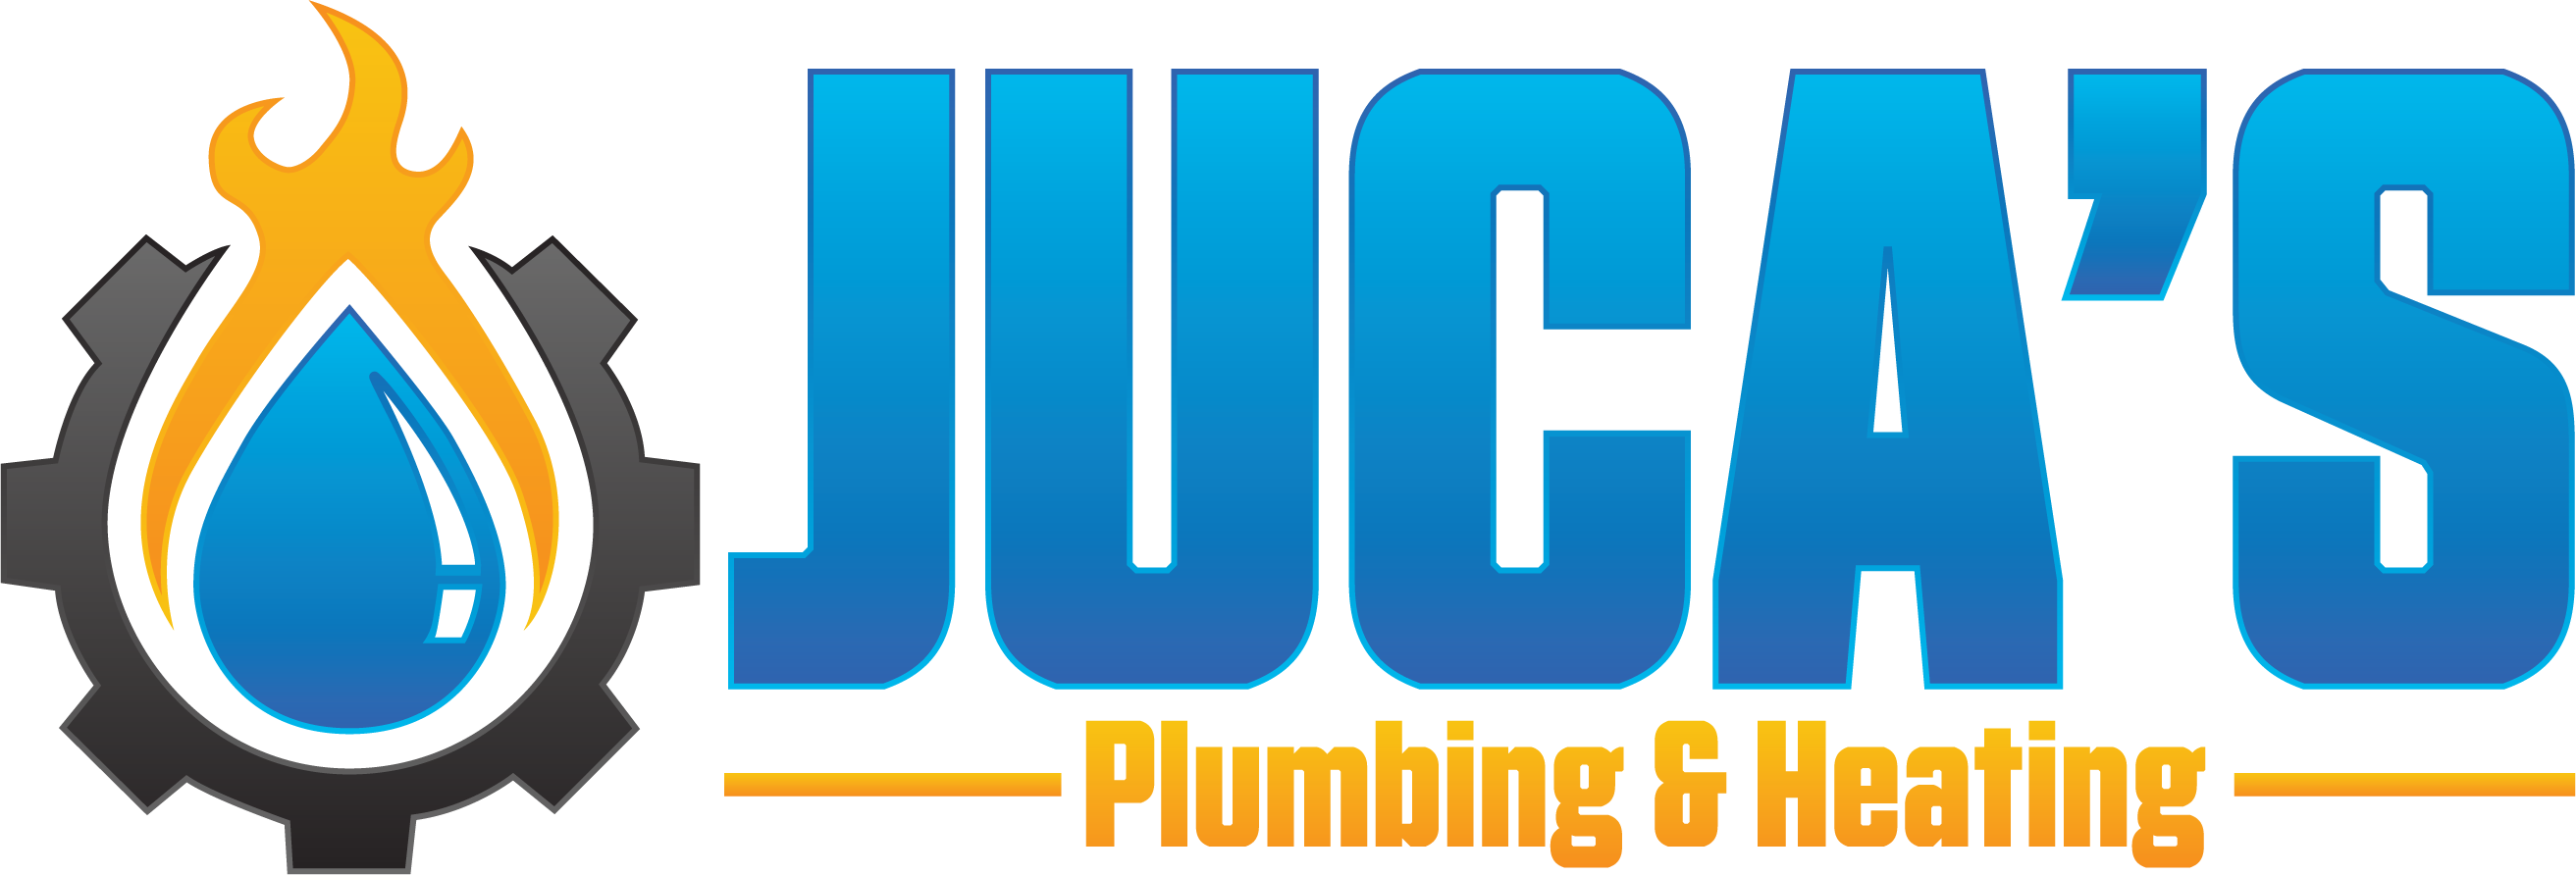 Juca's Plumbing & Heating Logo